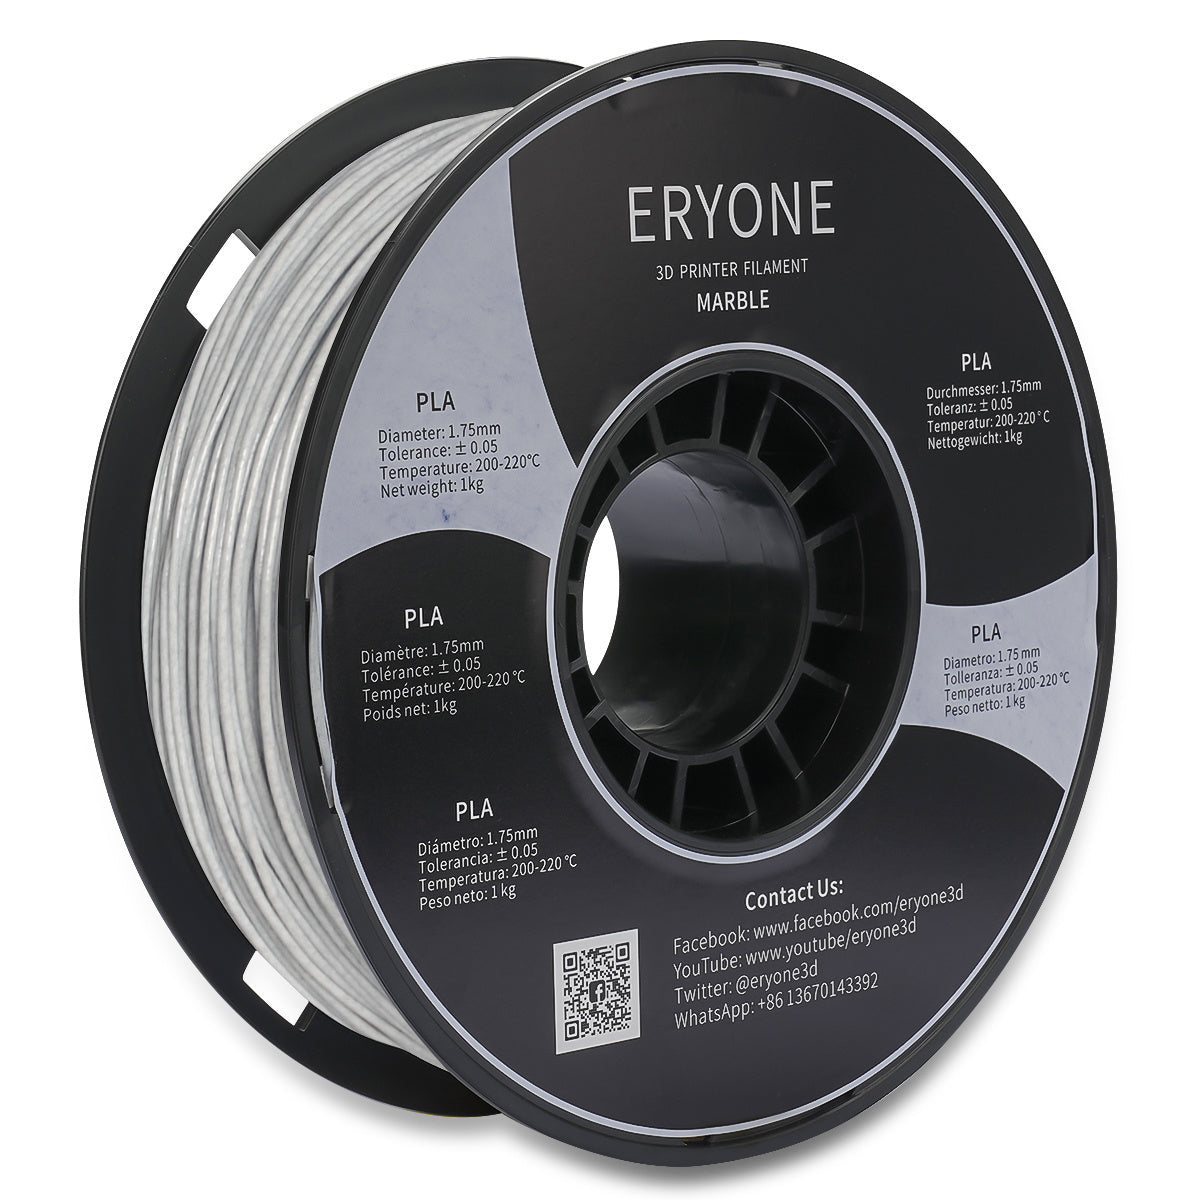 ERYONE Marble PLA Filament 1.75mm, Filamento de impresión 3D PLA para impresora/pluma 3D FDM, 1kg 1 carrete